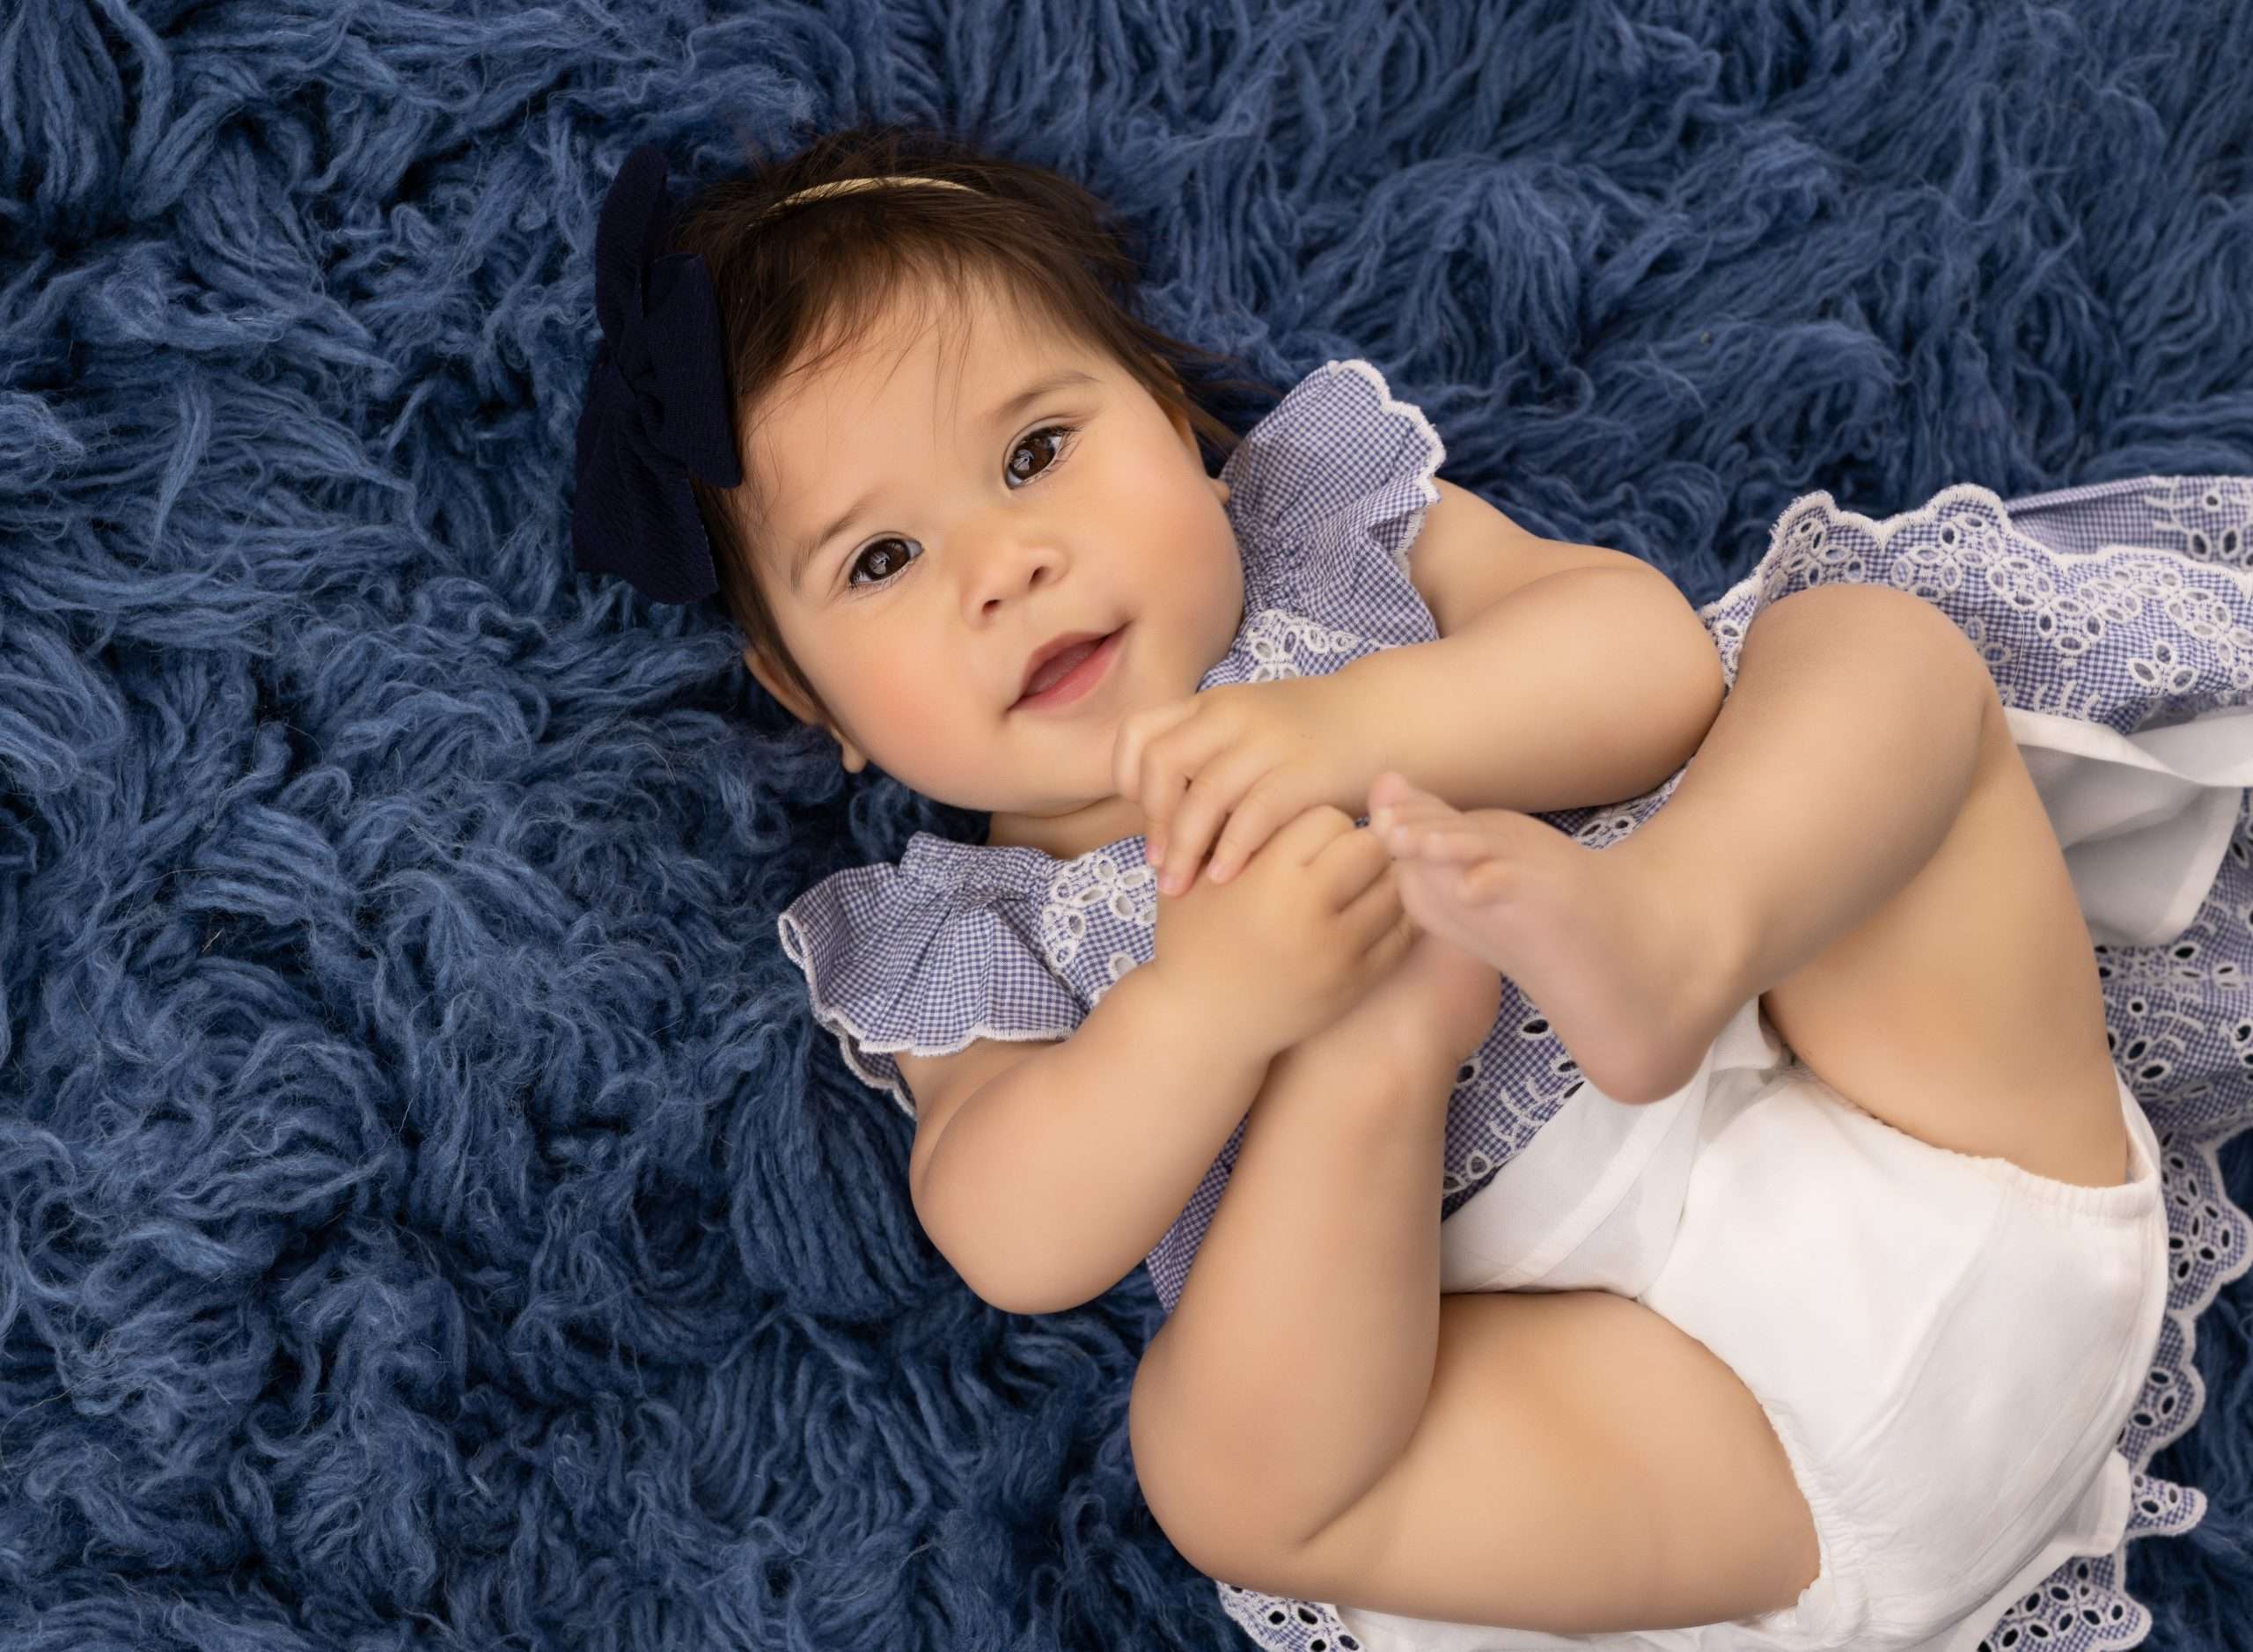 baby photographer Upper Arlington OH, professional baby photos, baby photography packages